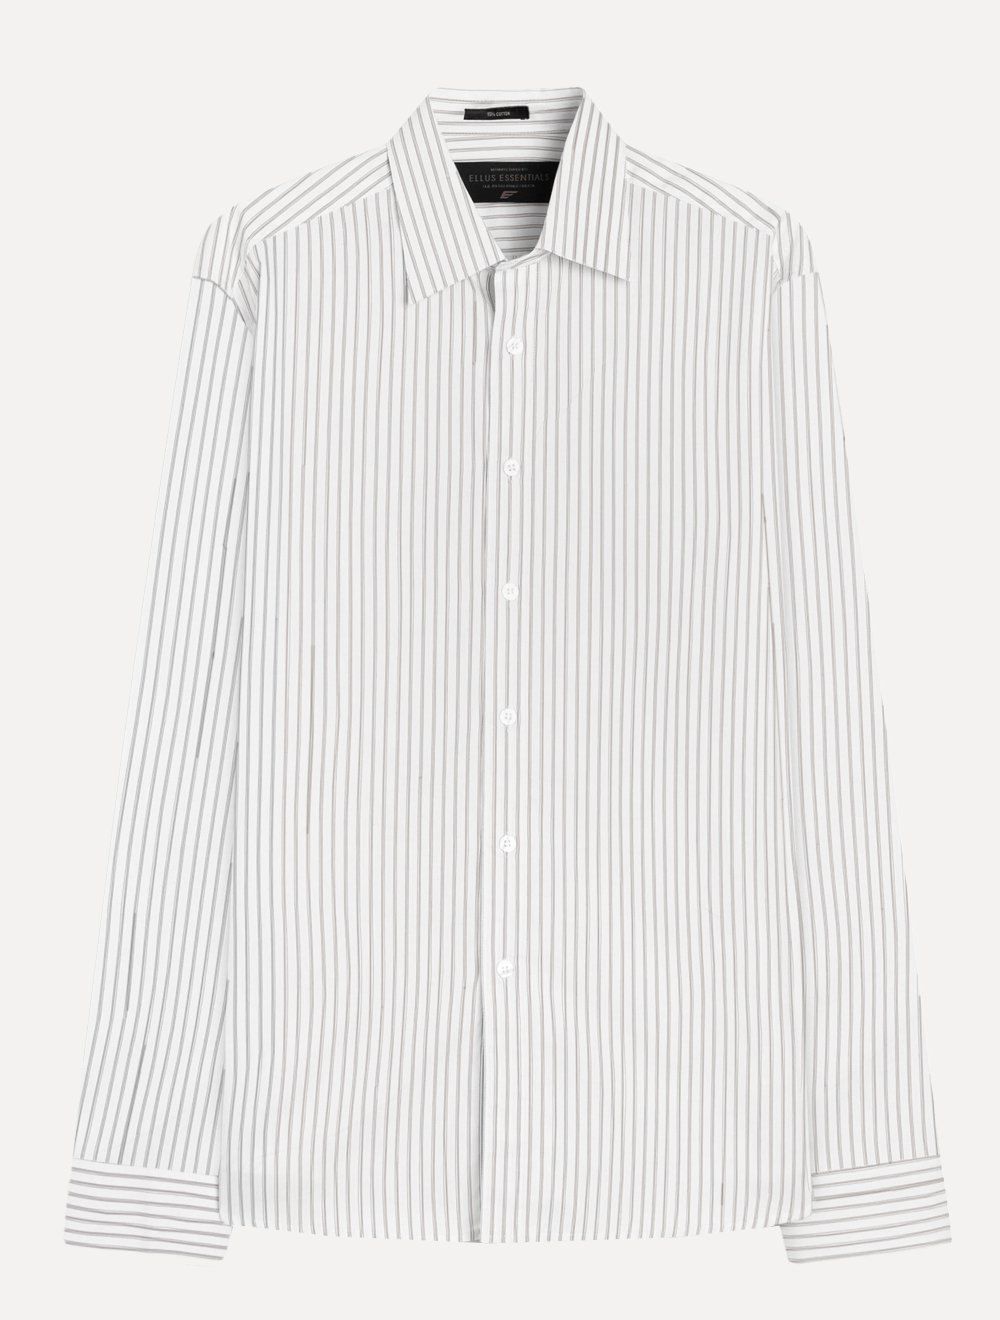 Camisa Ellus Masculina Slim Manga Curta Tricoline Arkansas Stripes Branca